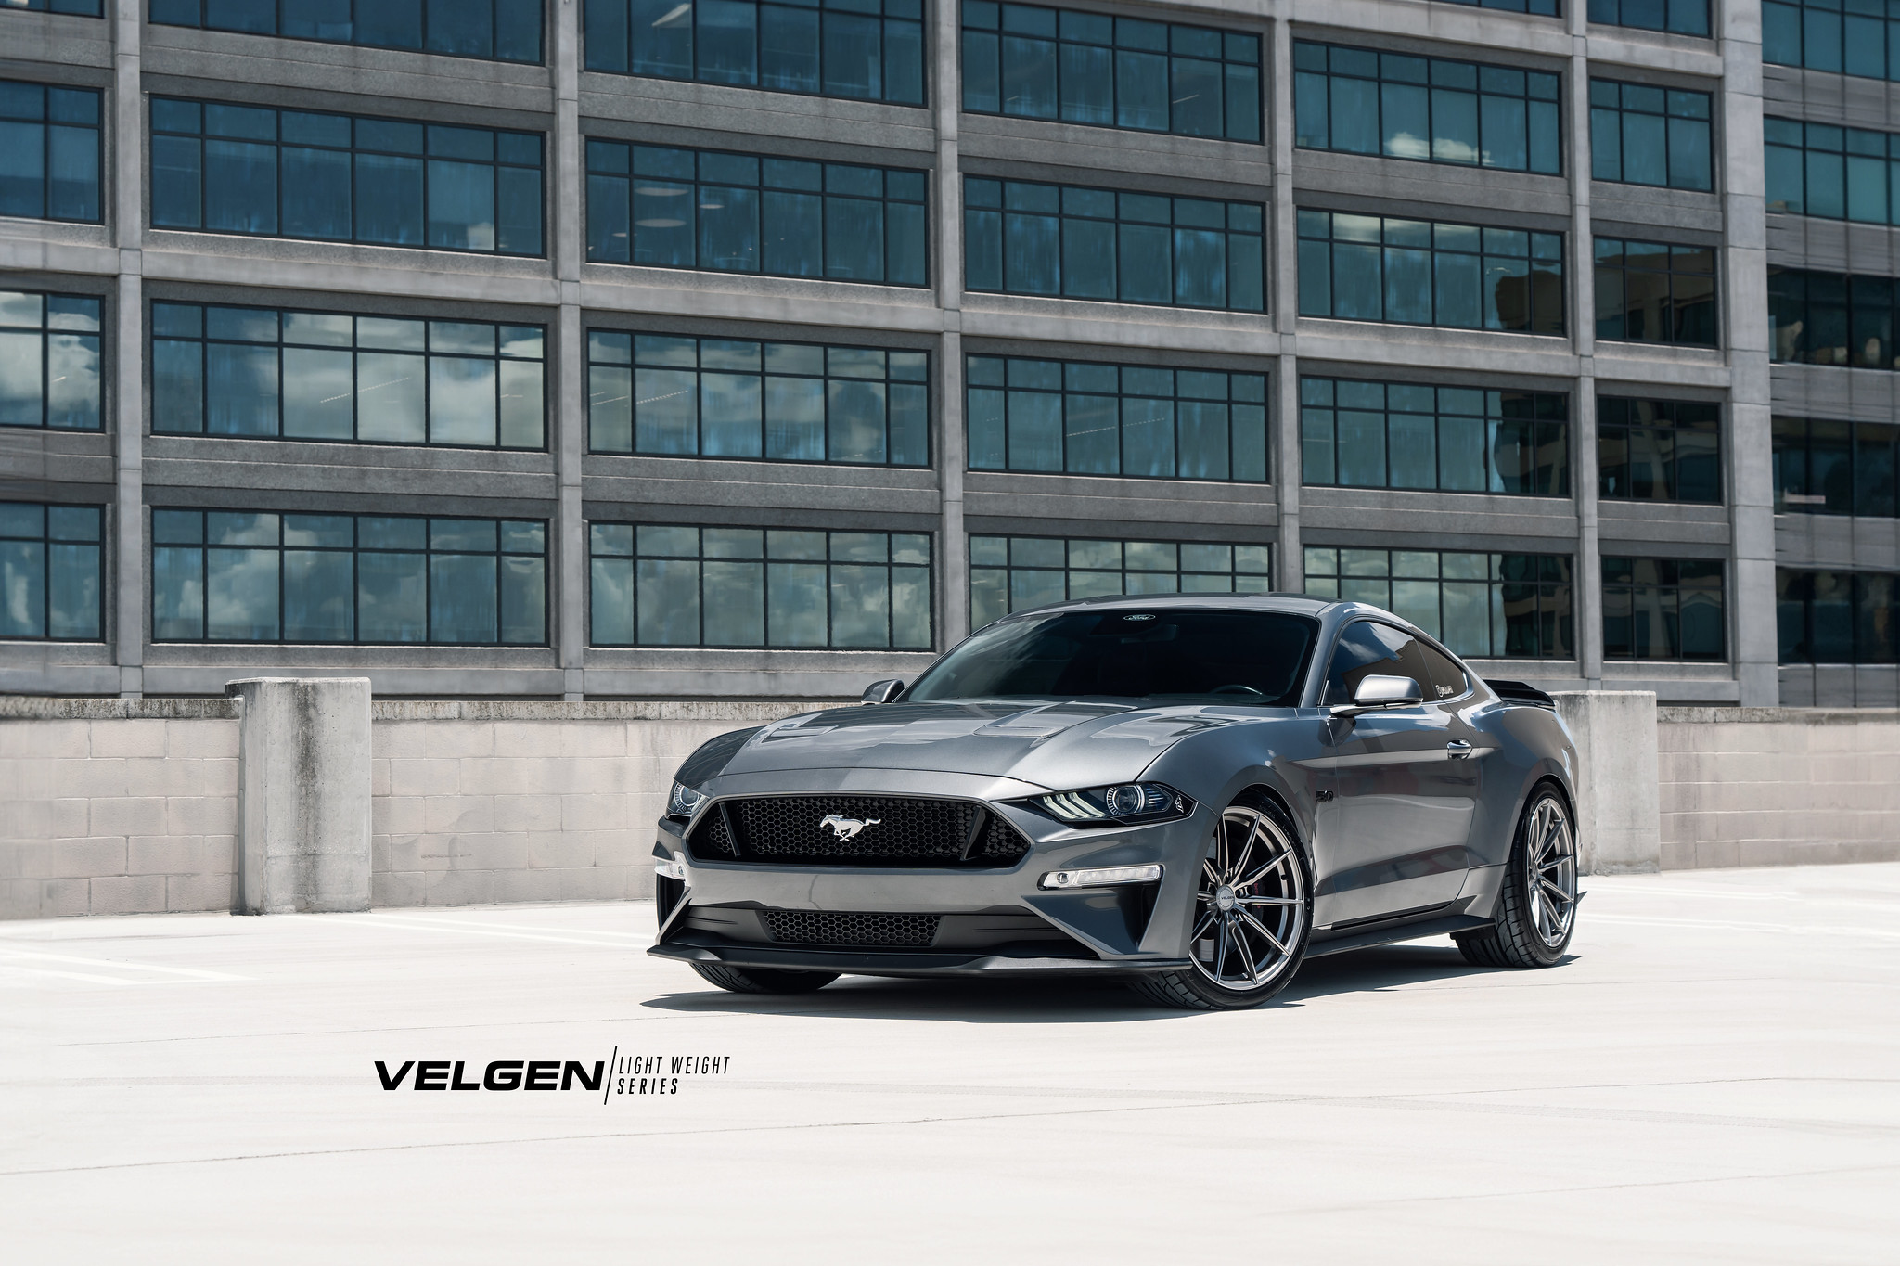 S650 Mustang Velgen wheels for your S650 Mustang | Vibe Motorsports 53054708032_40038613fa_k